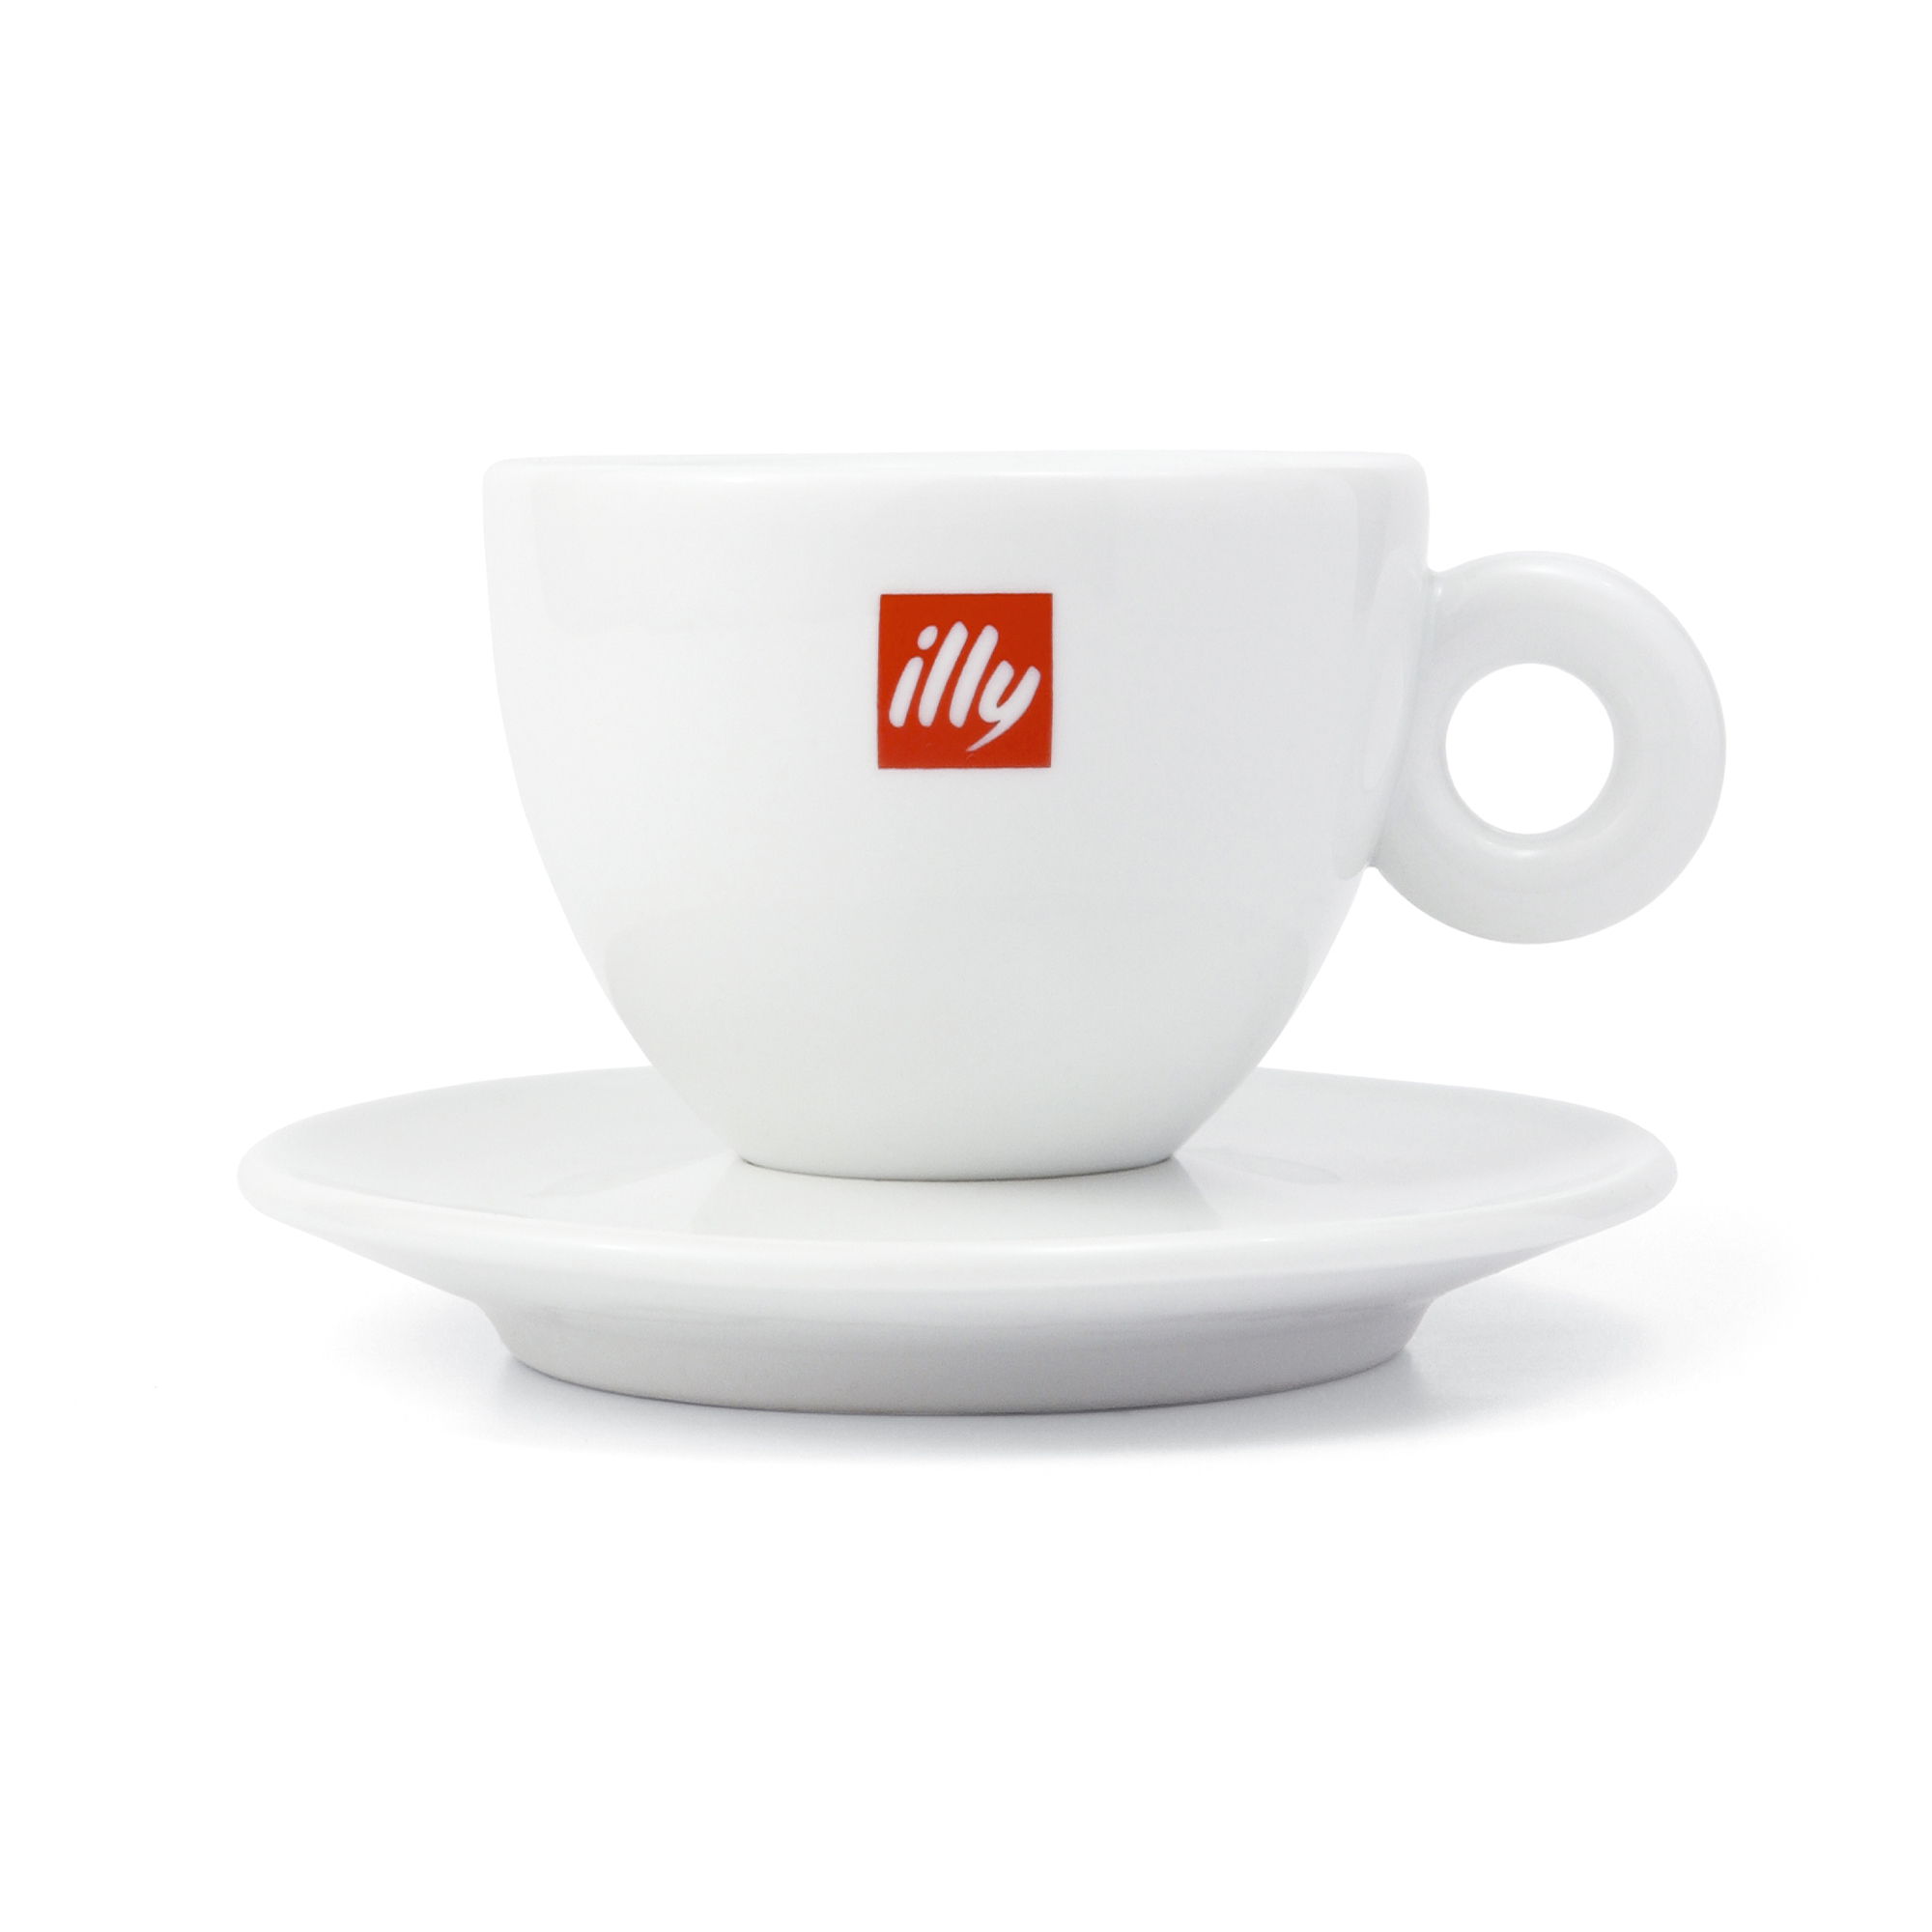 2 Tasses à cappuccino avec logo illy